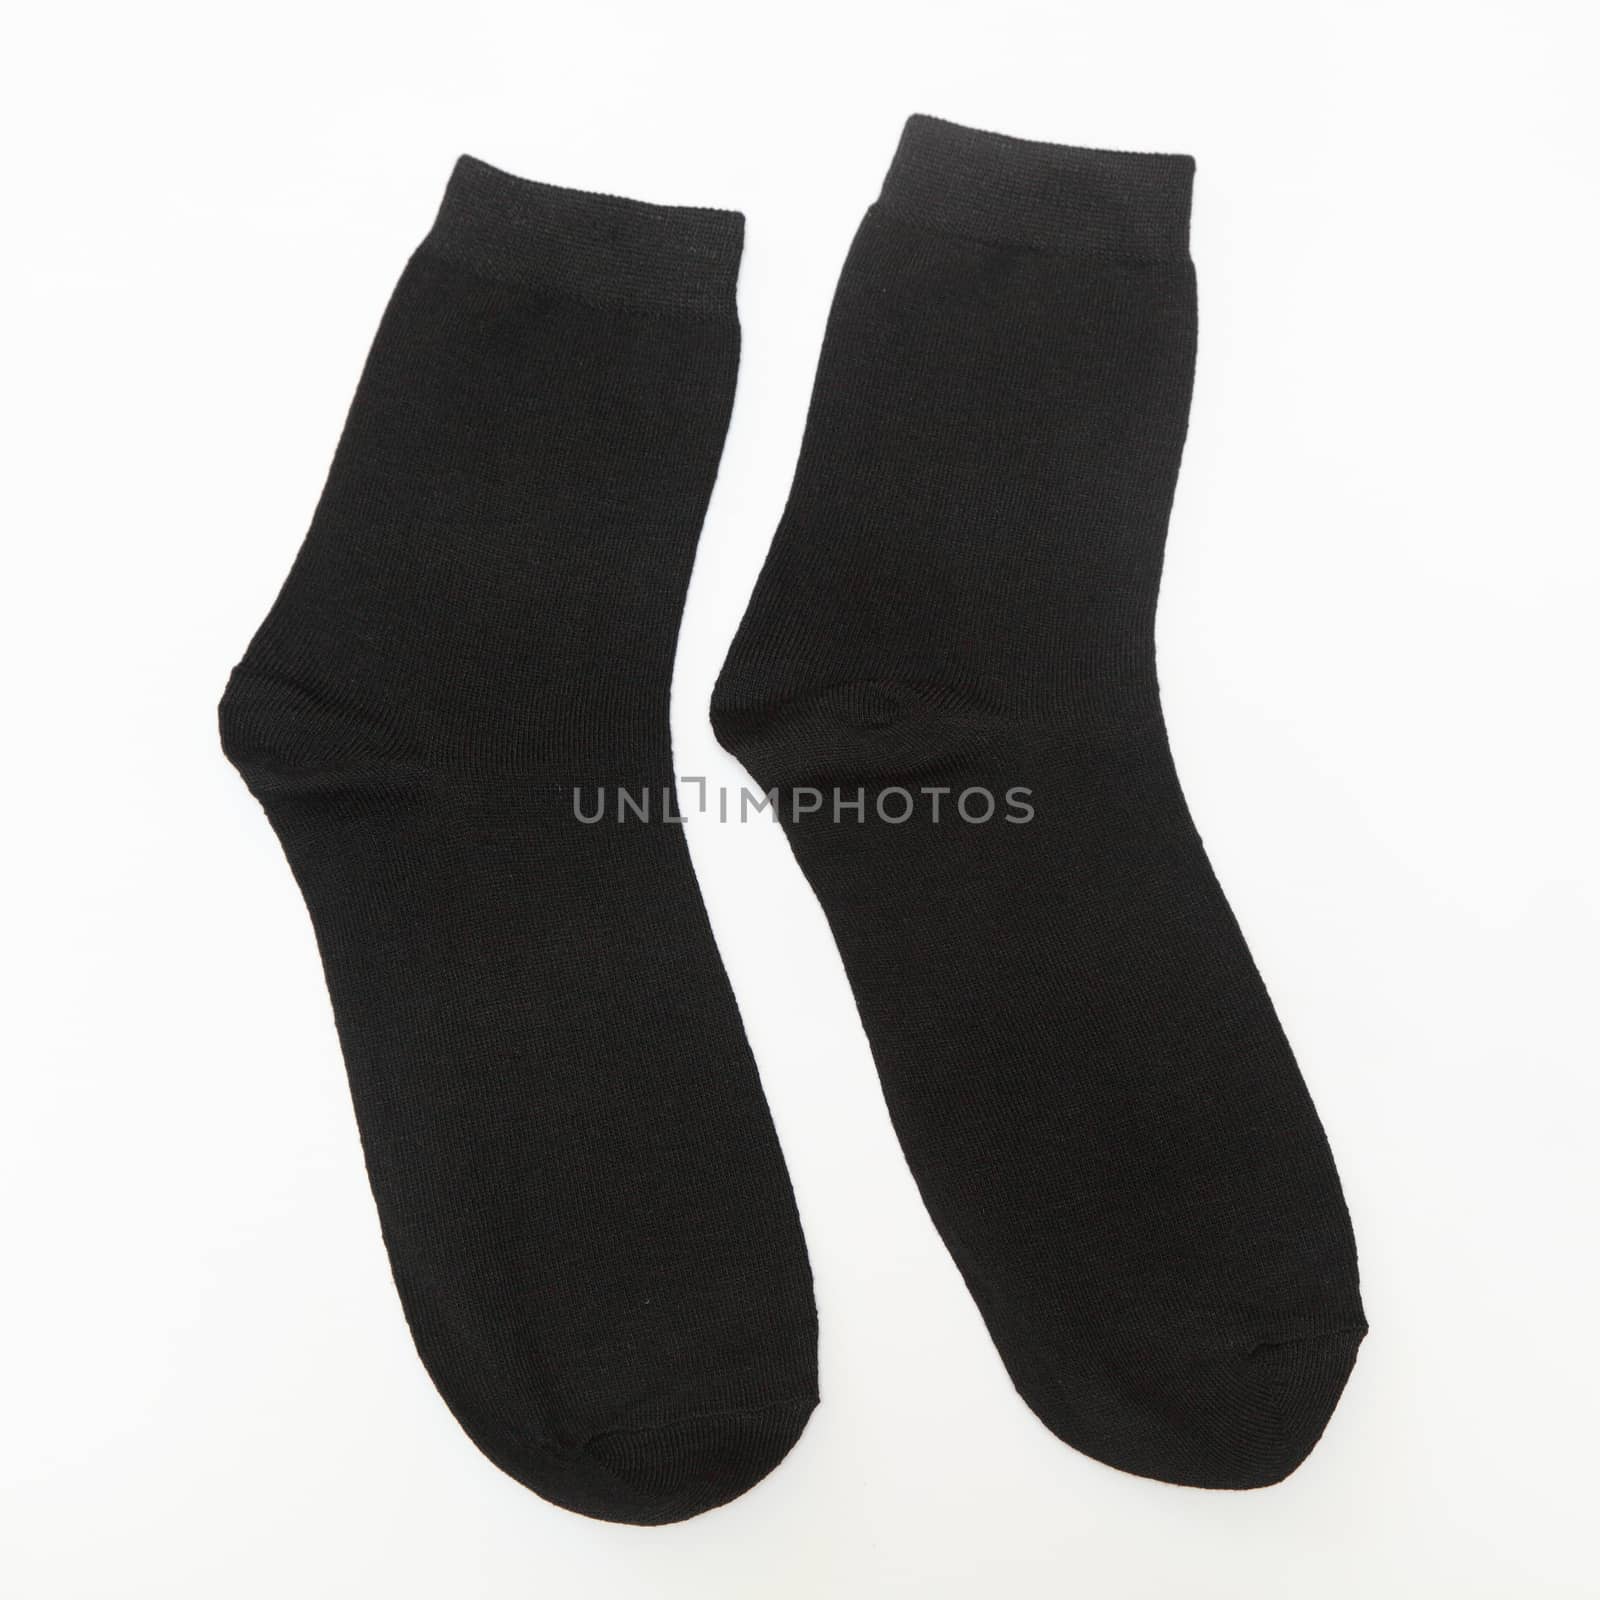 textile black socks on a white background